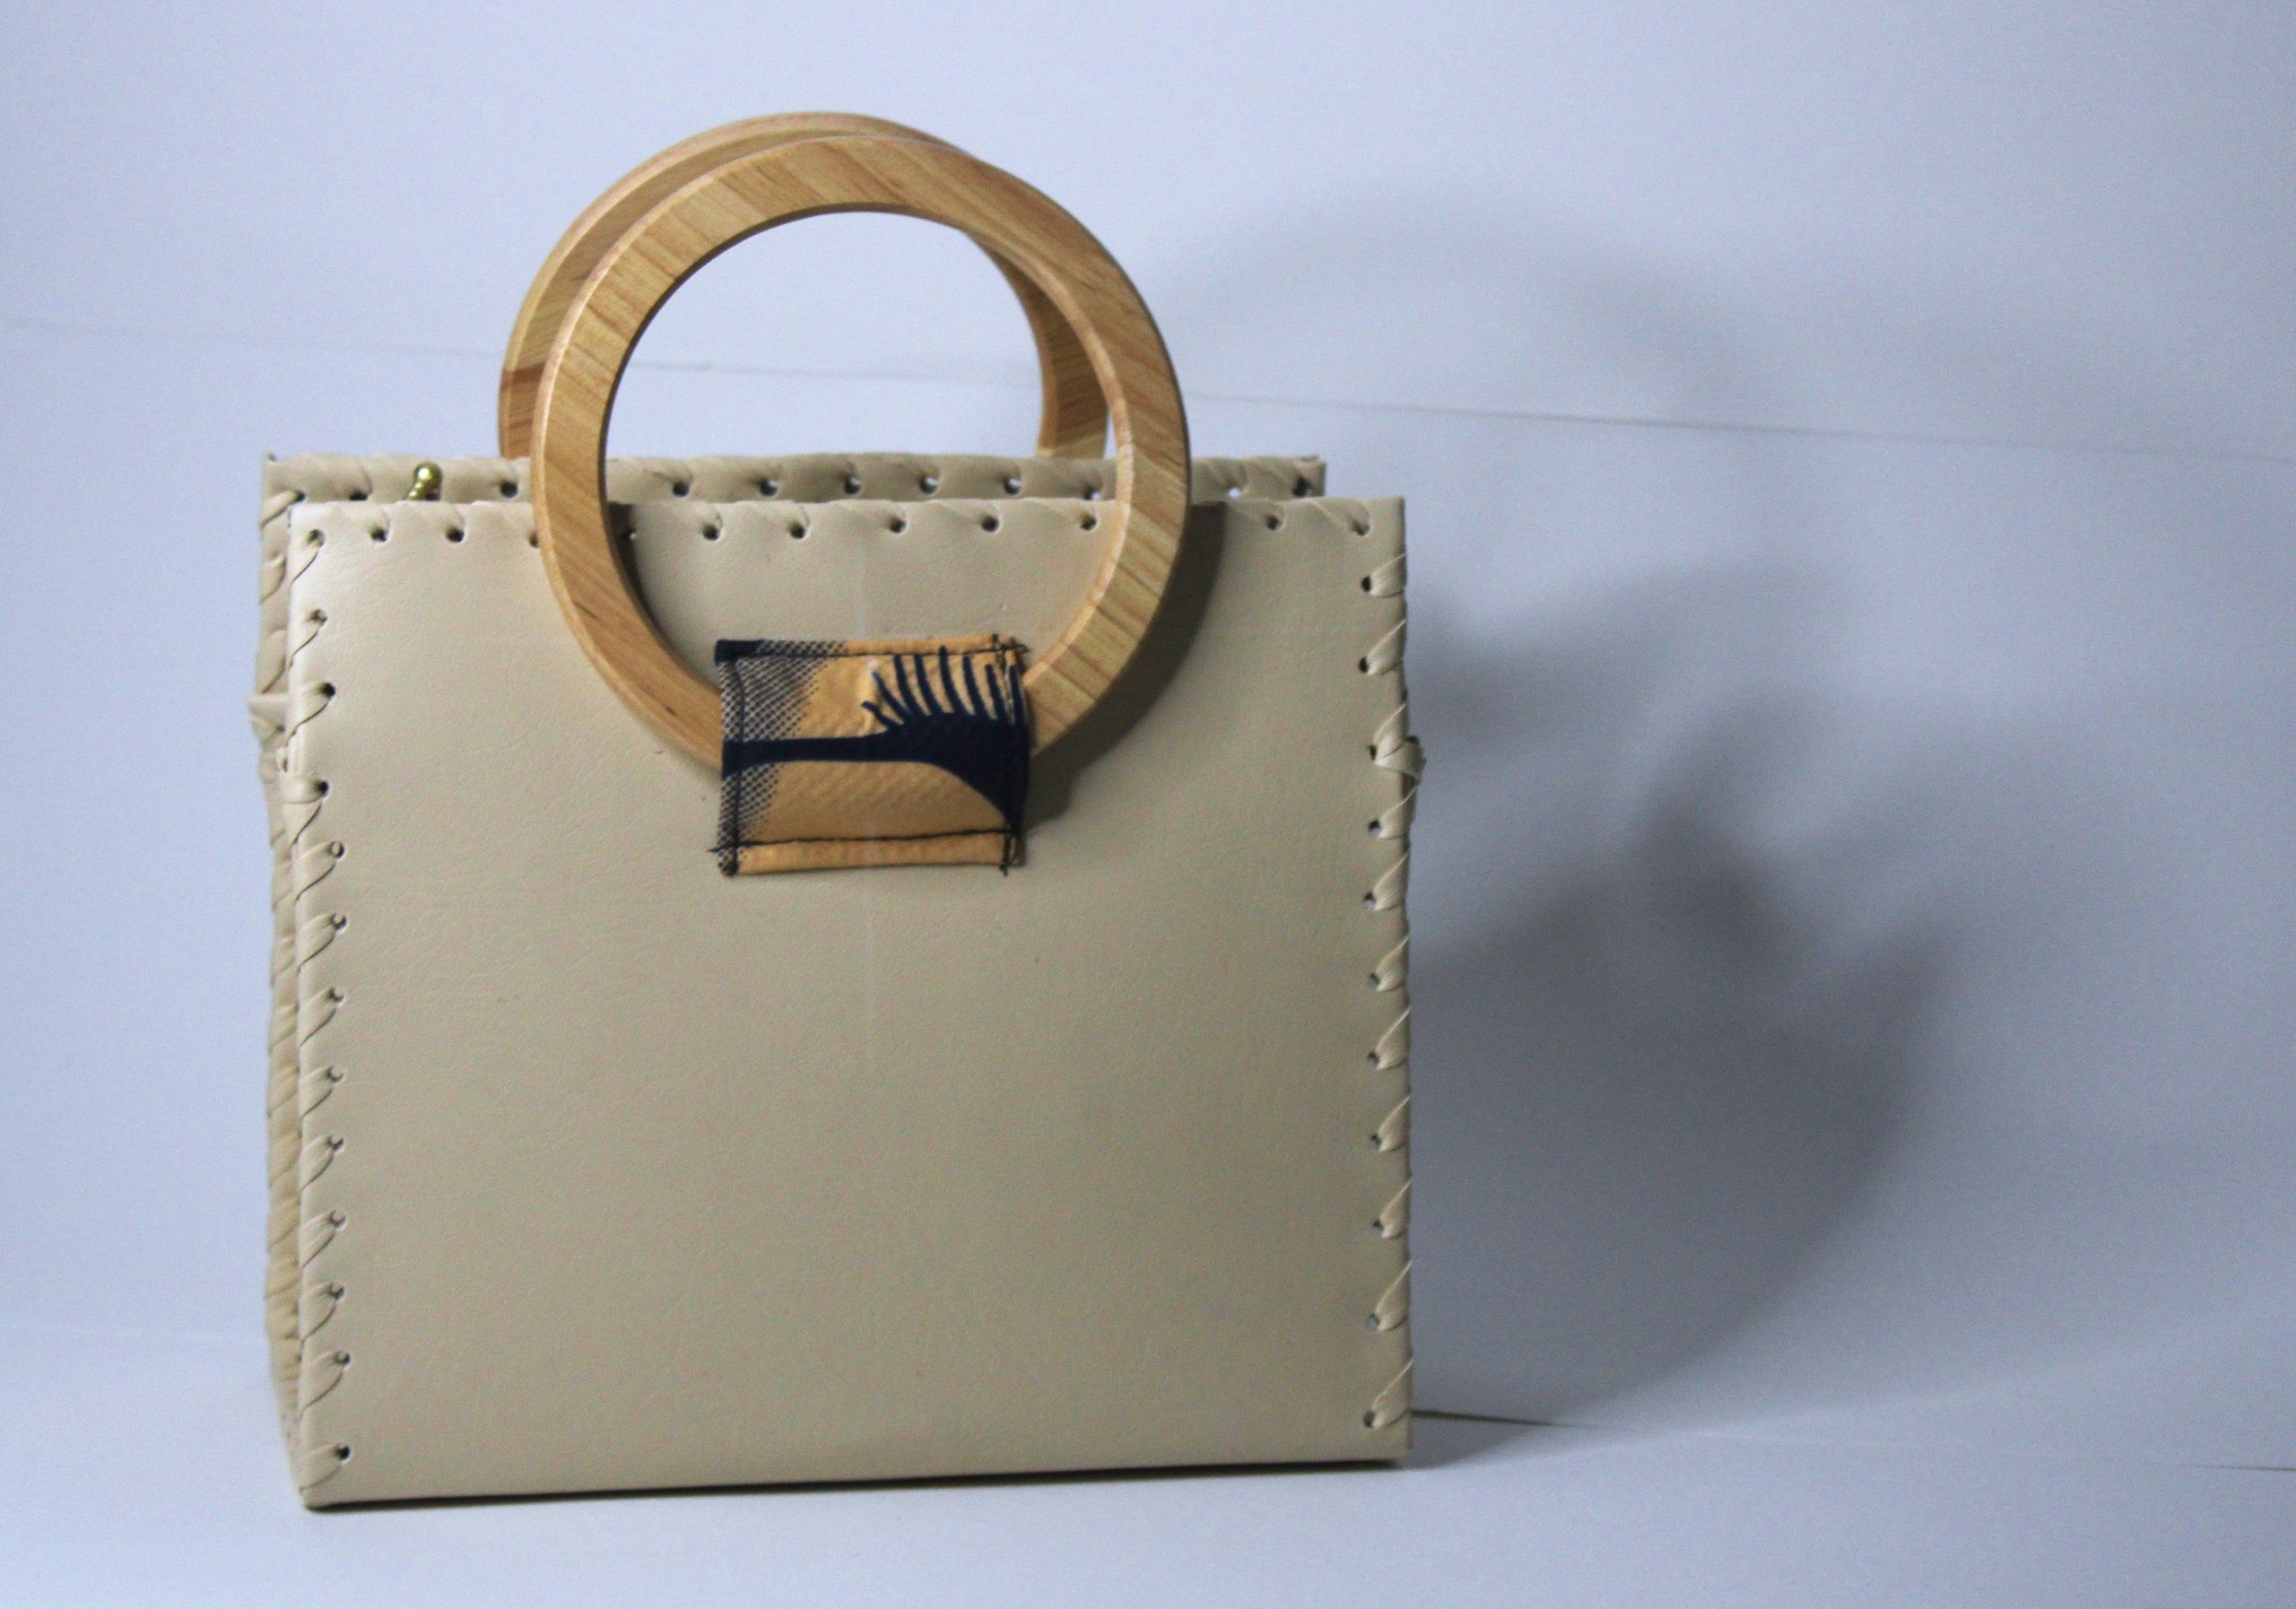 Beige Vegan Leather Handcrafted Handbag with Wooden Handles & Floral Ankara Detail | Wax Print African Fabric Bag | HandBag